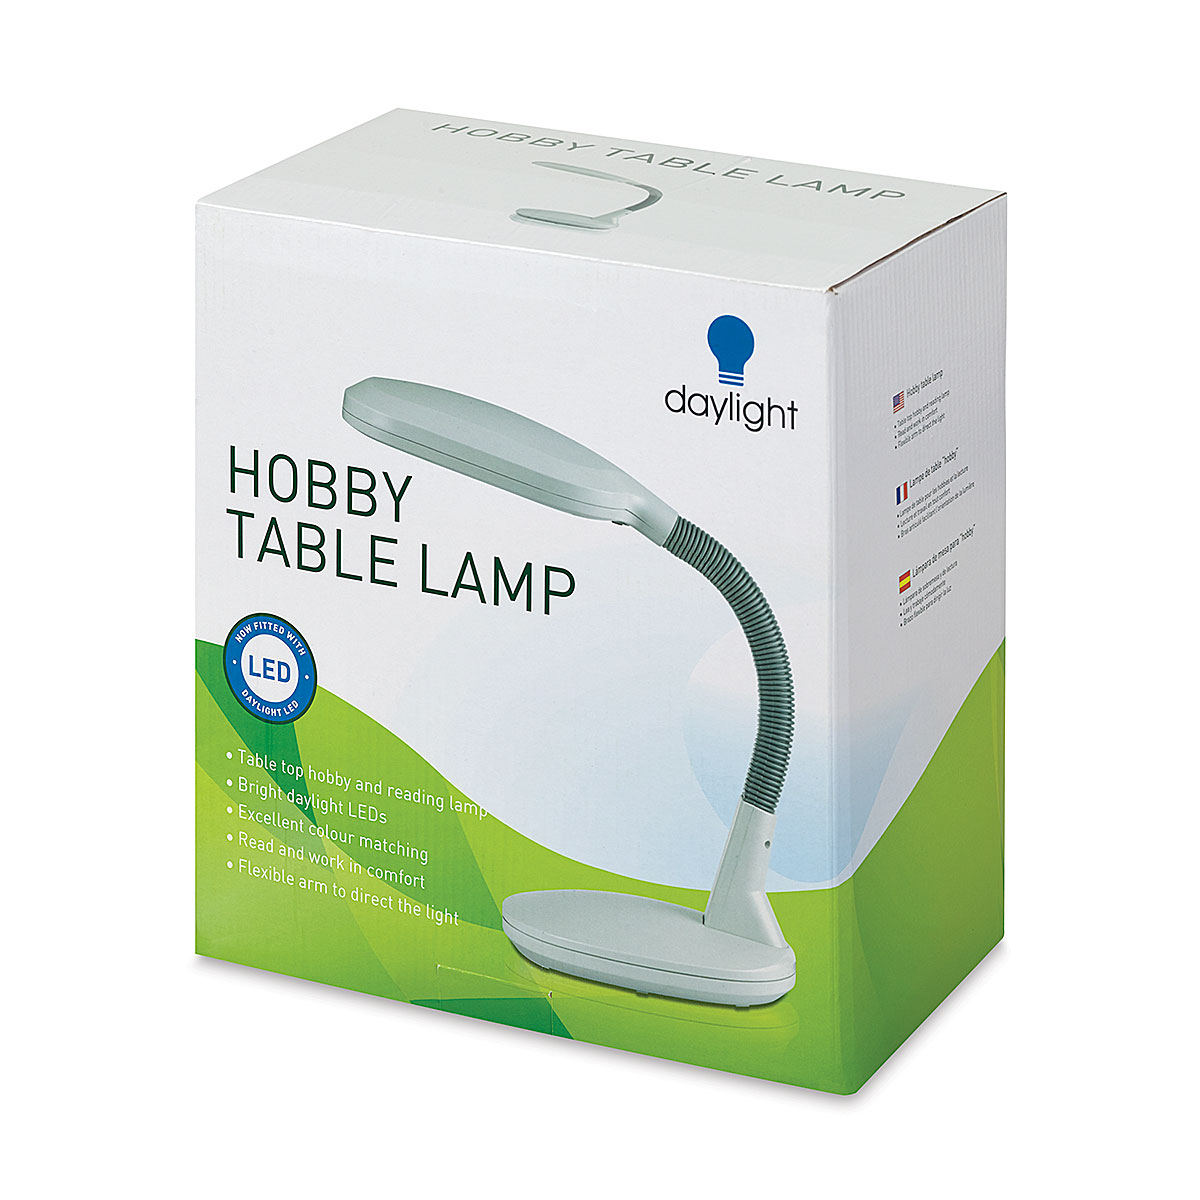 Daylight Led Hobby Table Lamp Blick, Daylight Naturalight Hobby Table Lamp